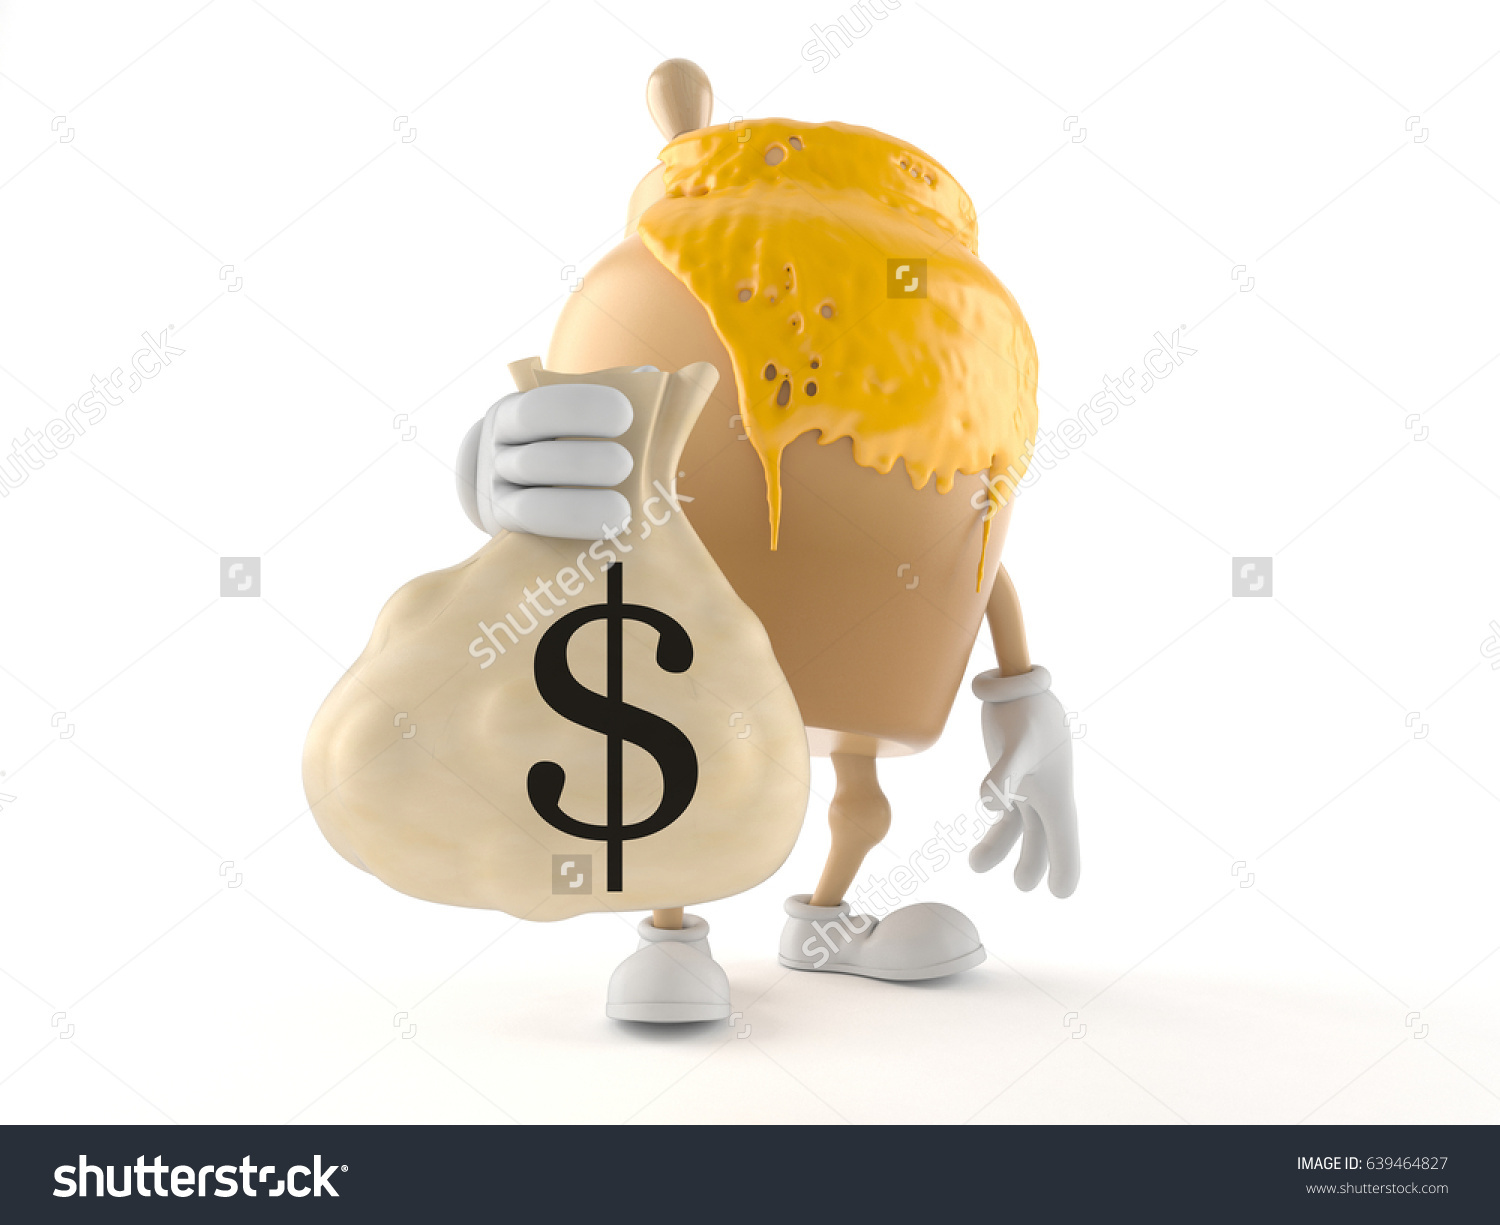 stock-photo-honey-jar-character-holding-money-bag-isolated-on-white-background-d-illustration-639464827.jpg